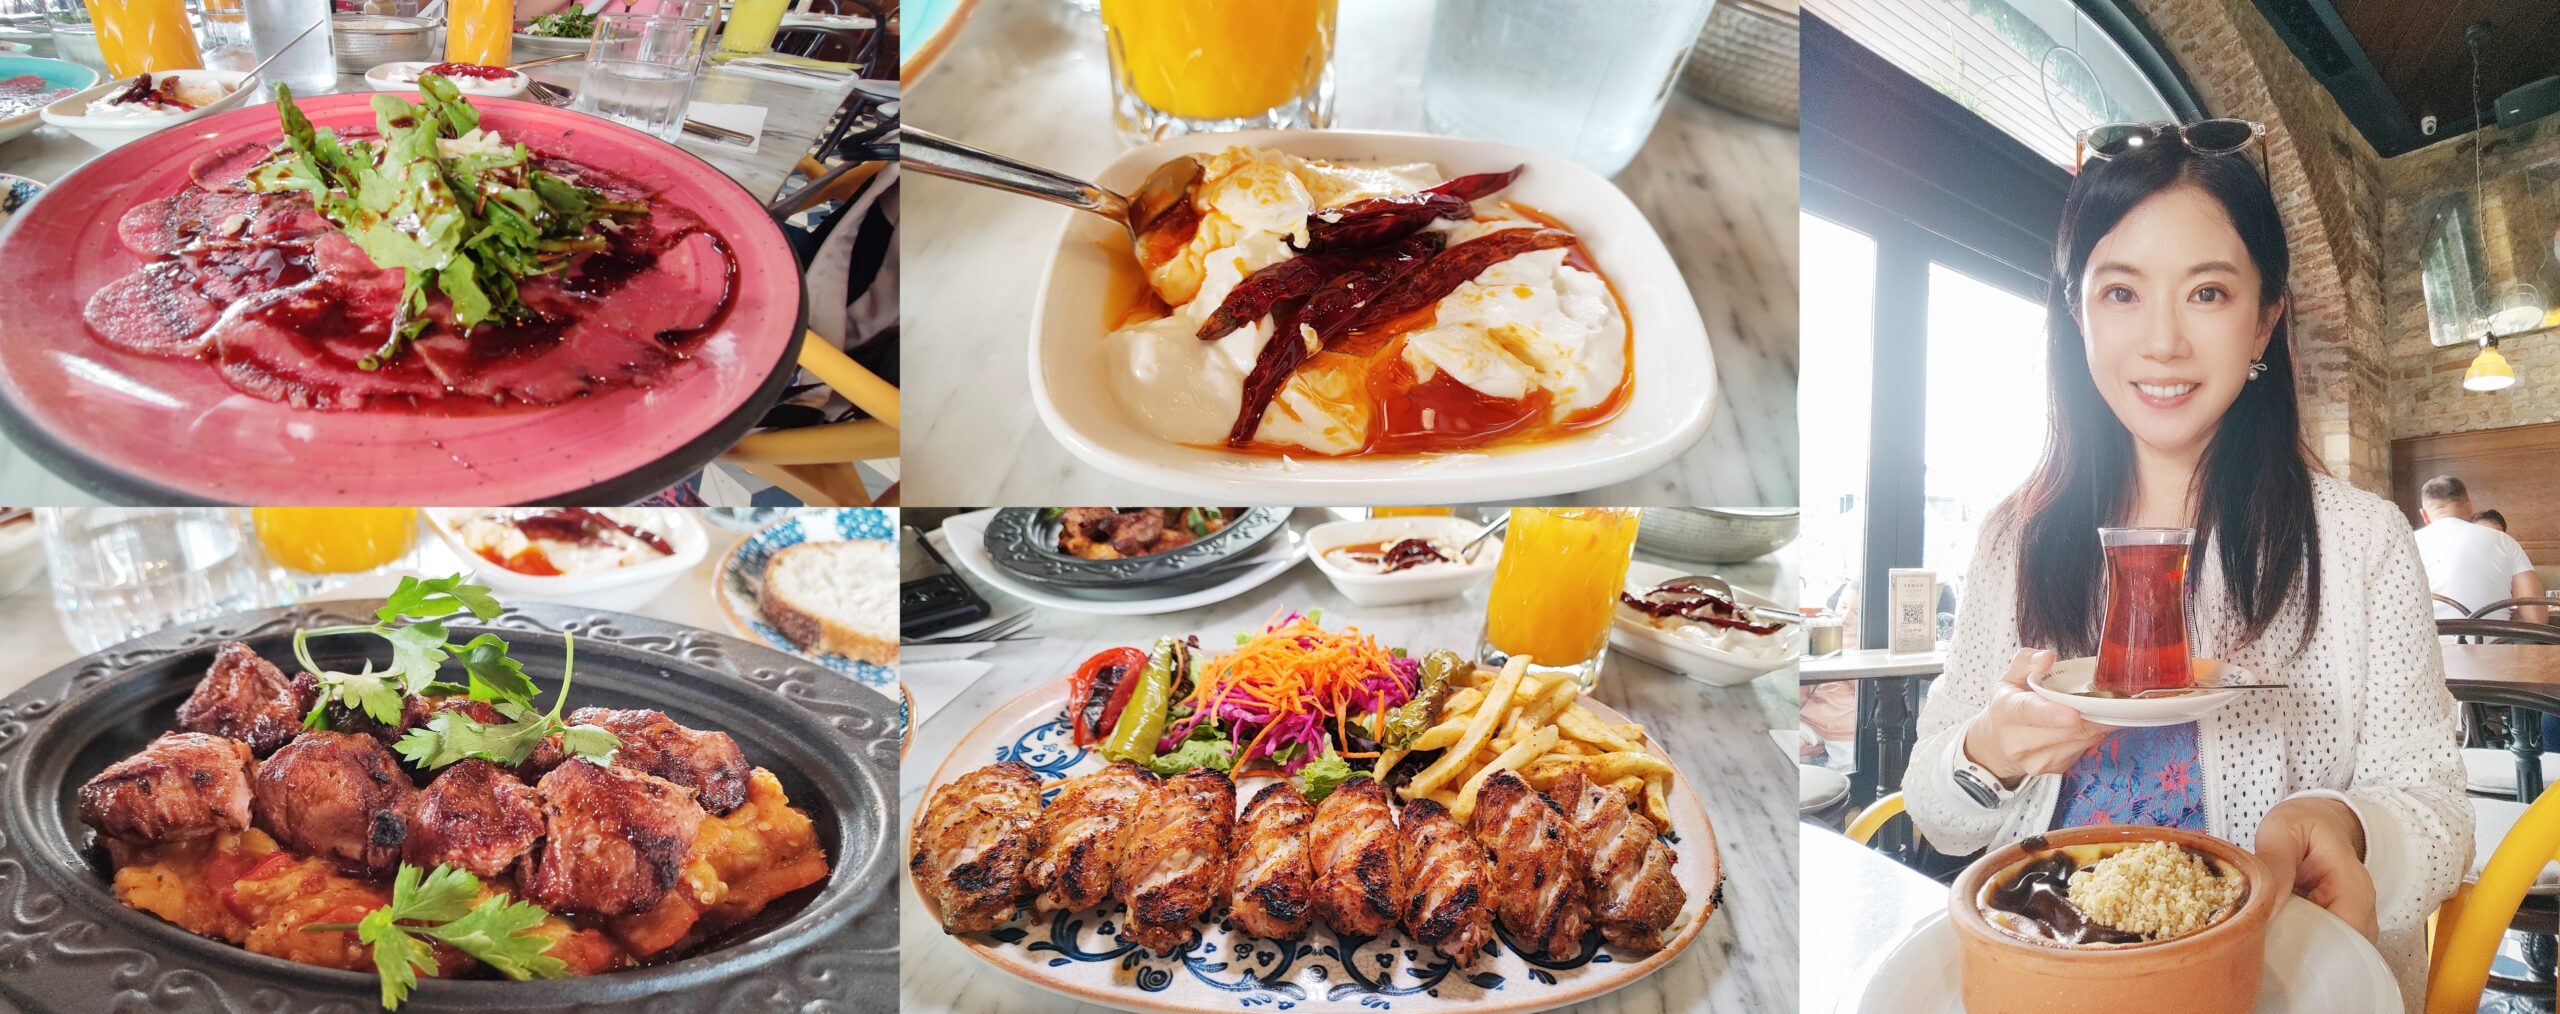 Guney Restaurant,Istanbul,伊斯坦堡,伊斯坦堡餐廳,土耳其Turkiye,土耳其旅遊,土耳其碳烤